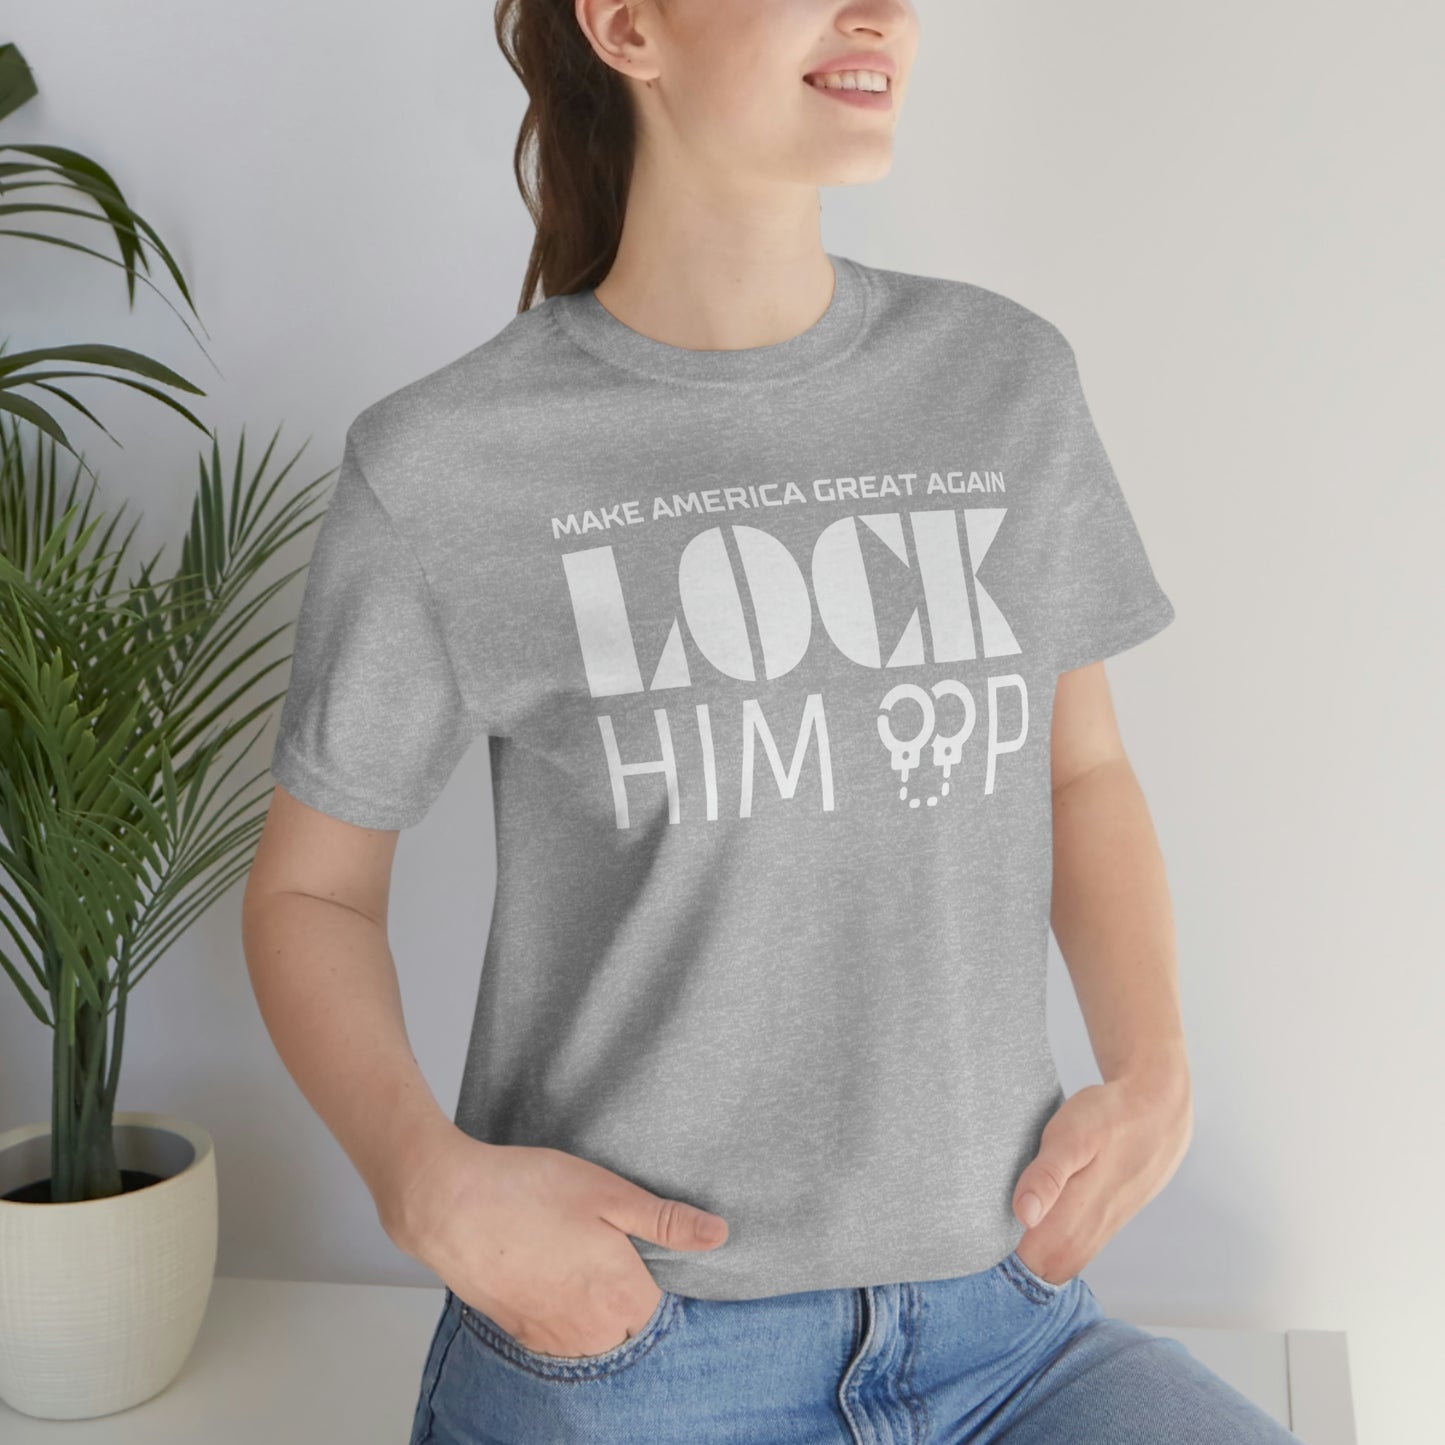 Make America Great Again Lock Him Up T-Shirt | EDGY T-Shirt Company | Funny Trump Republican Politics Unisex Jersey Short Sleeve Tee